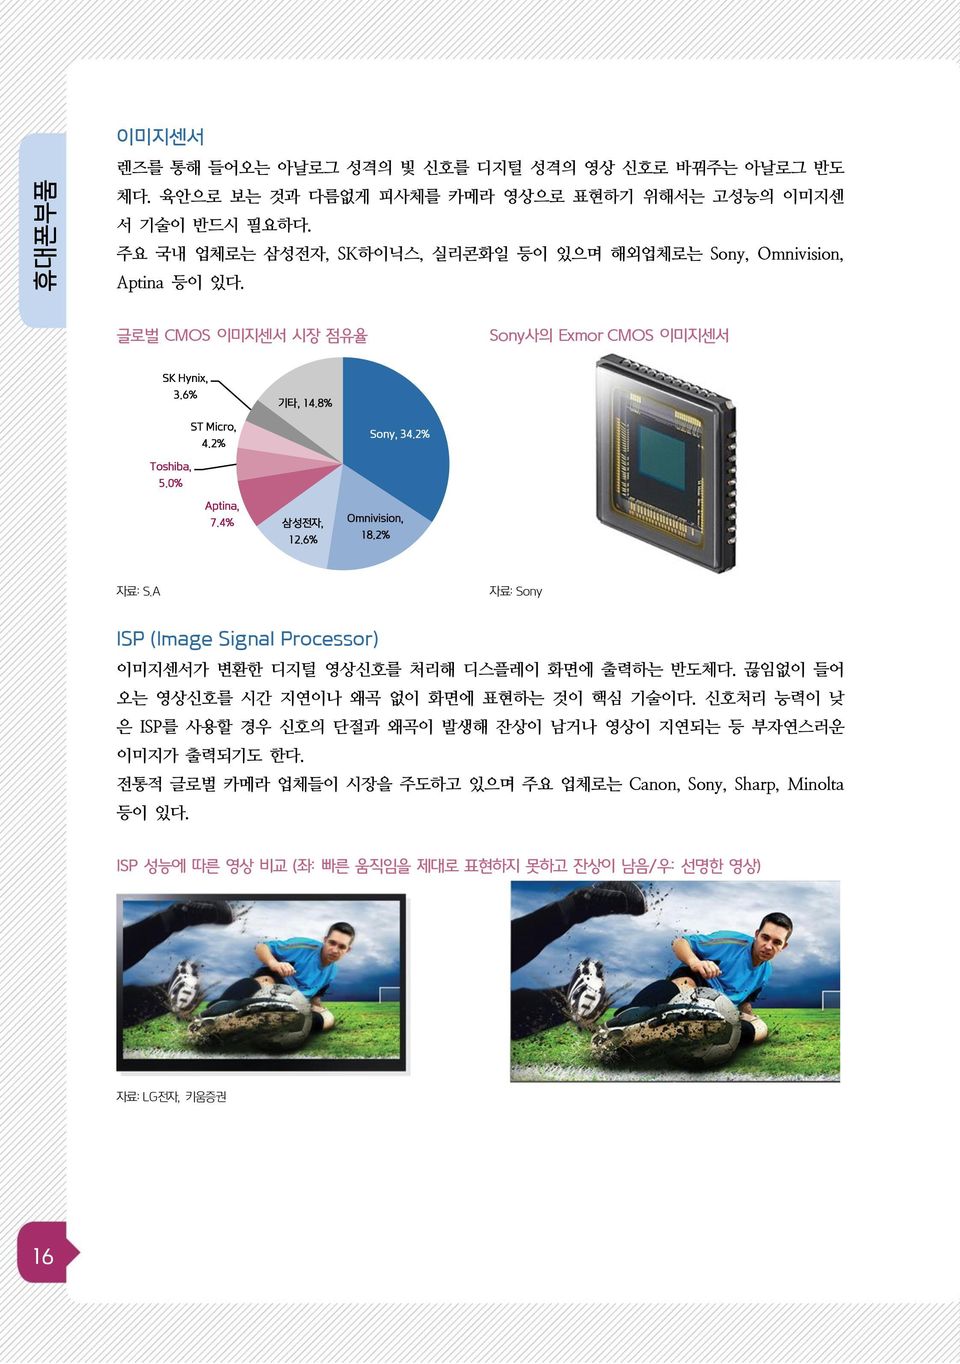 % Aptina, 7.4% 삼성전자, 12.6% Omnivision, 18.2% 자료: S.A 자료: Sony ISP (Image Signal Processor) 이미지센서가 변환한 디지털 영상신호를 처리해 디스플레이 화면에 출력하는 반도체다.